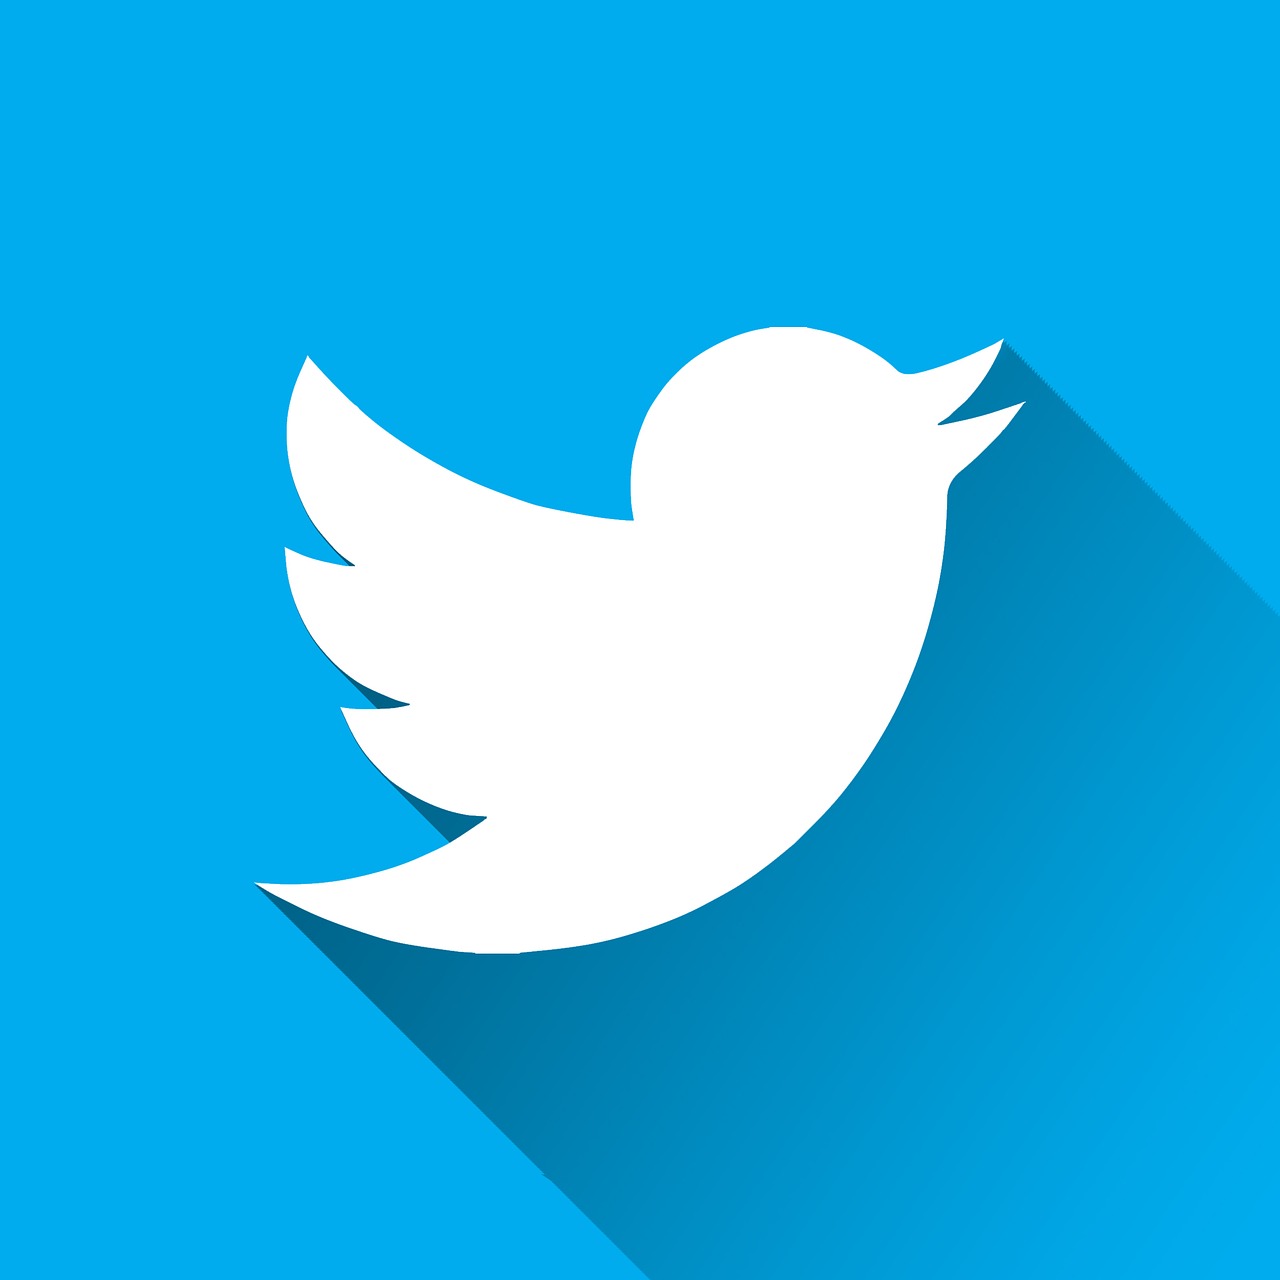 twitter logo blue free photo